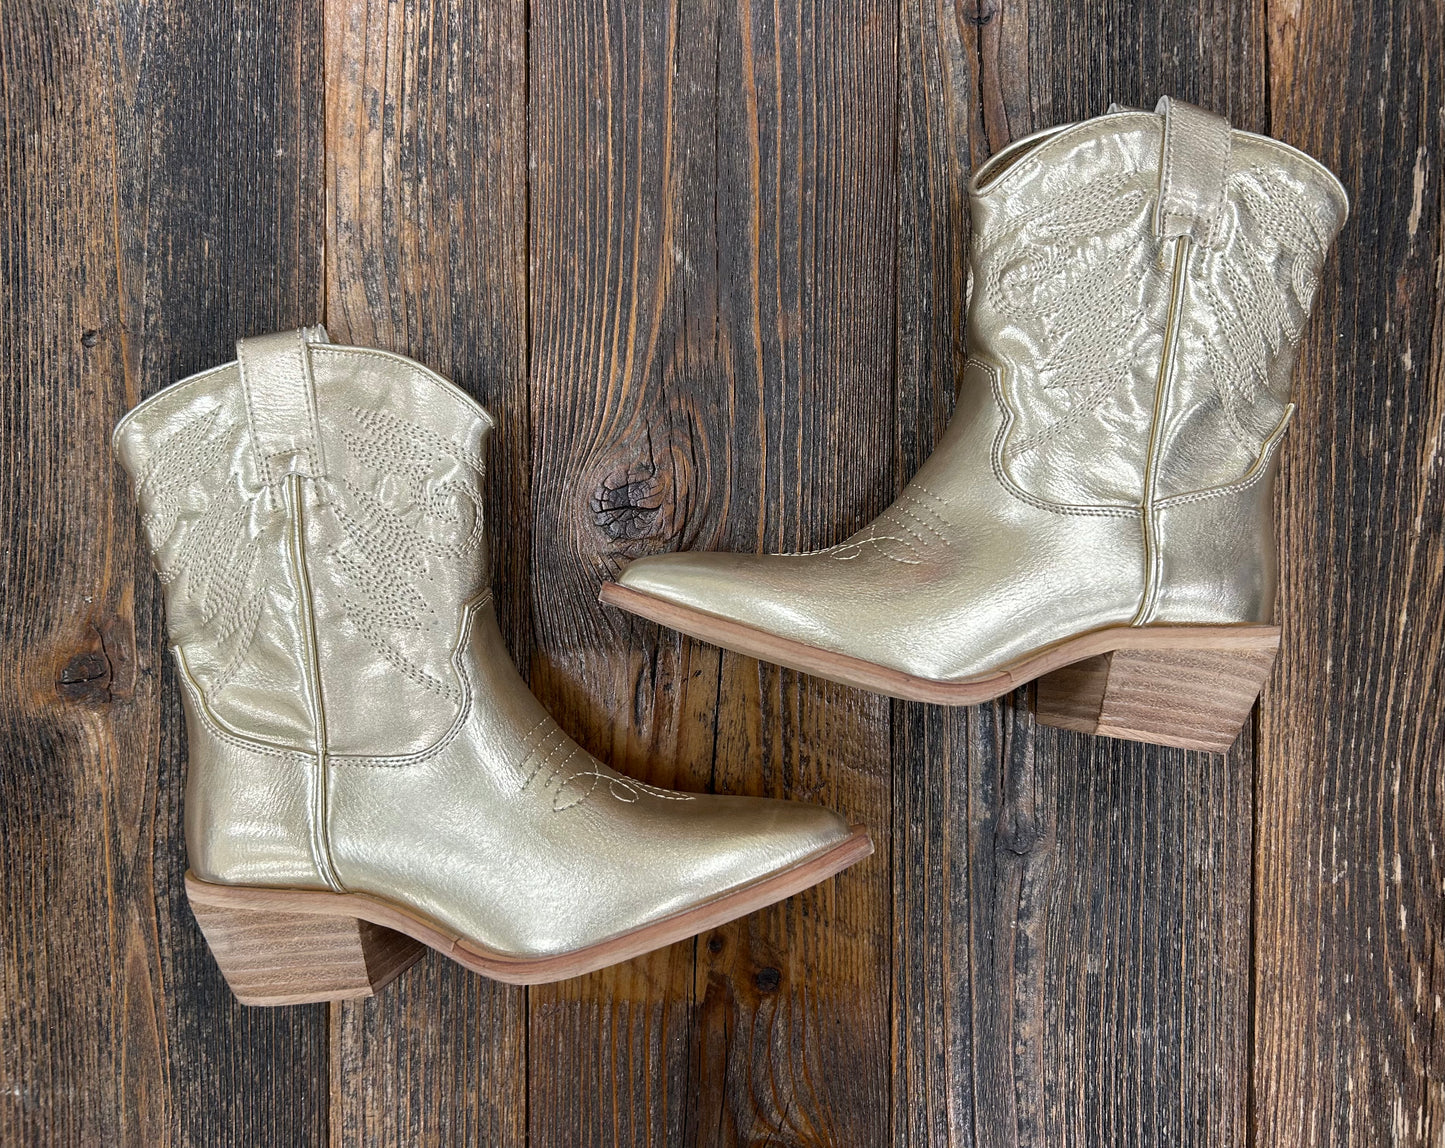 The “Hannah” ShuShop Metallic Gold Boot